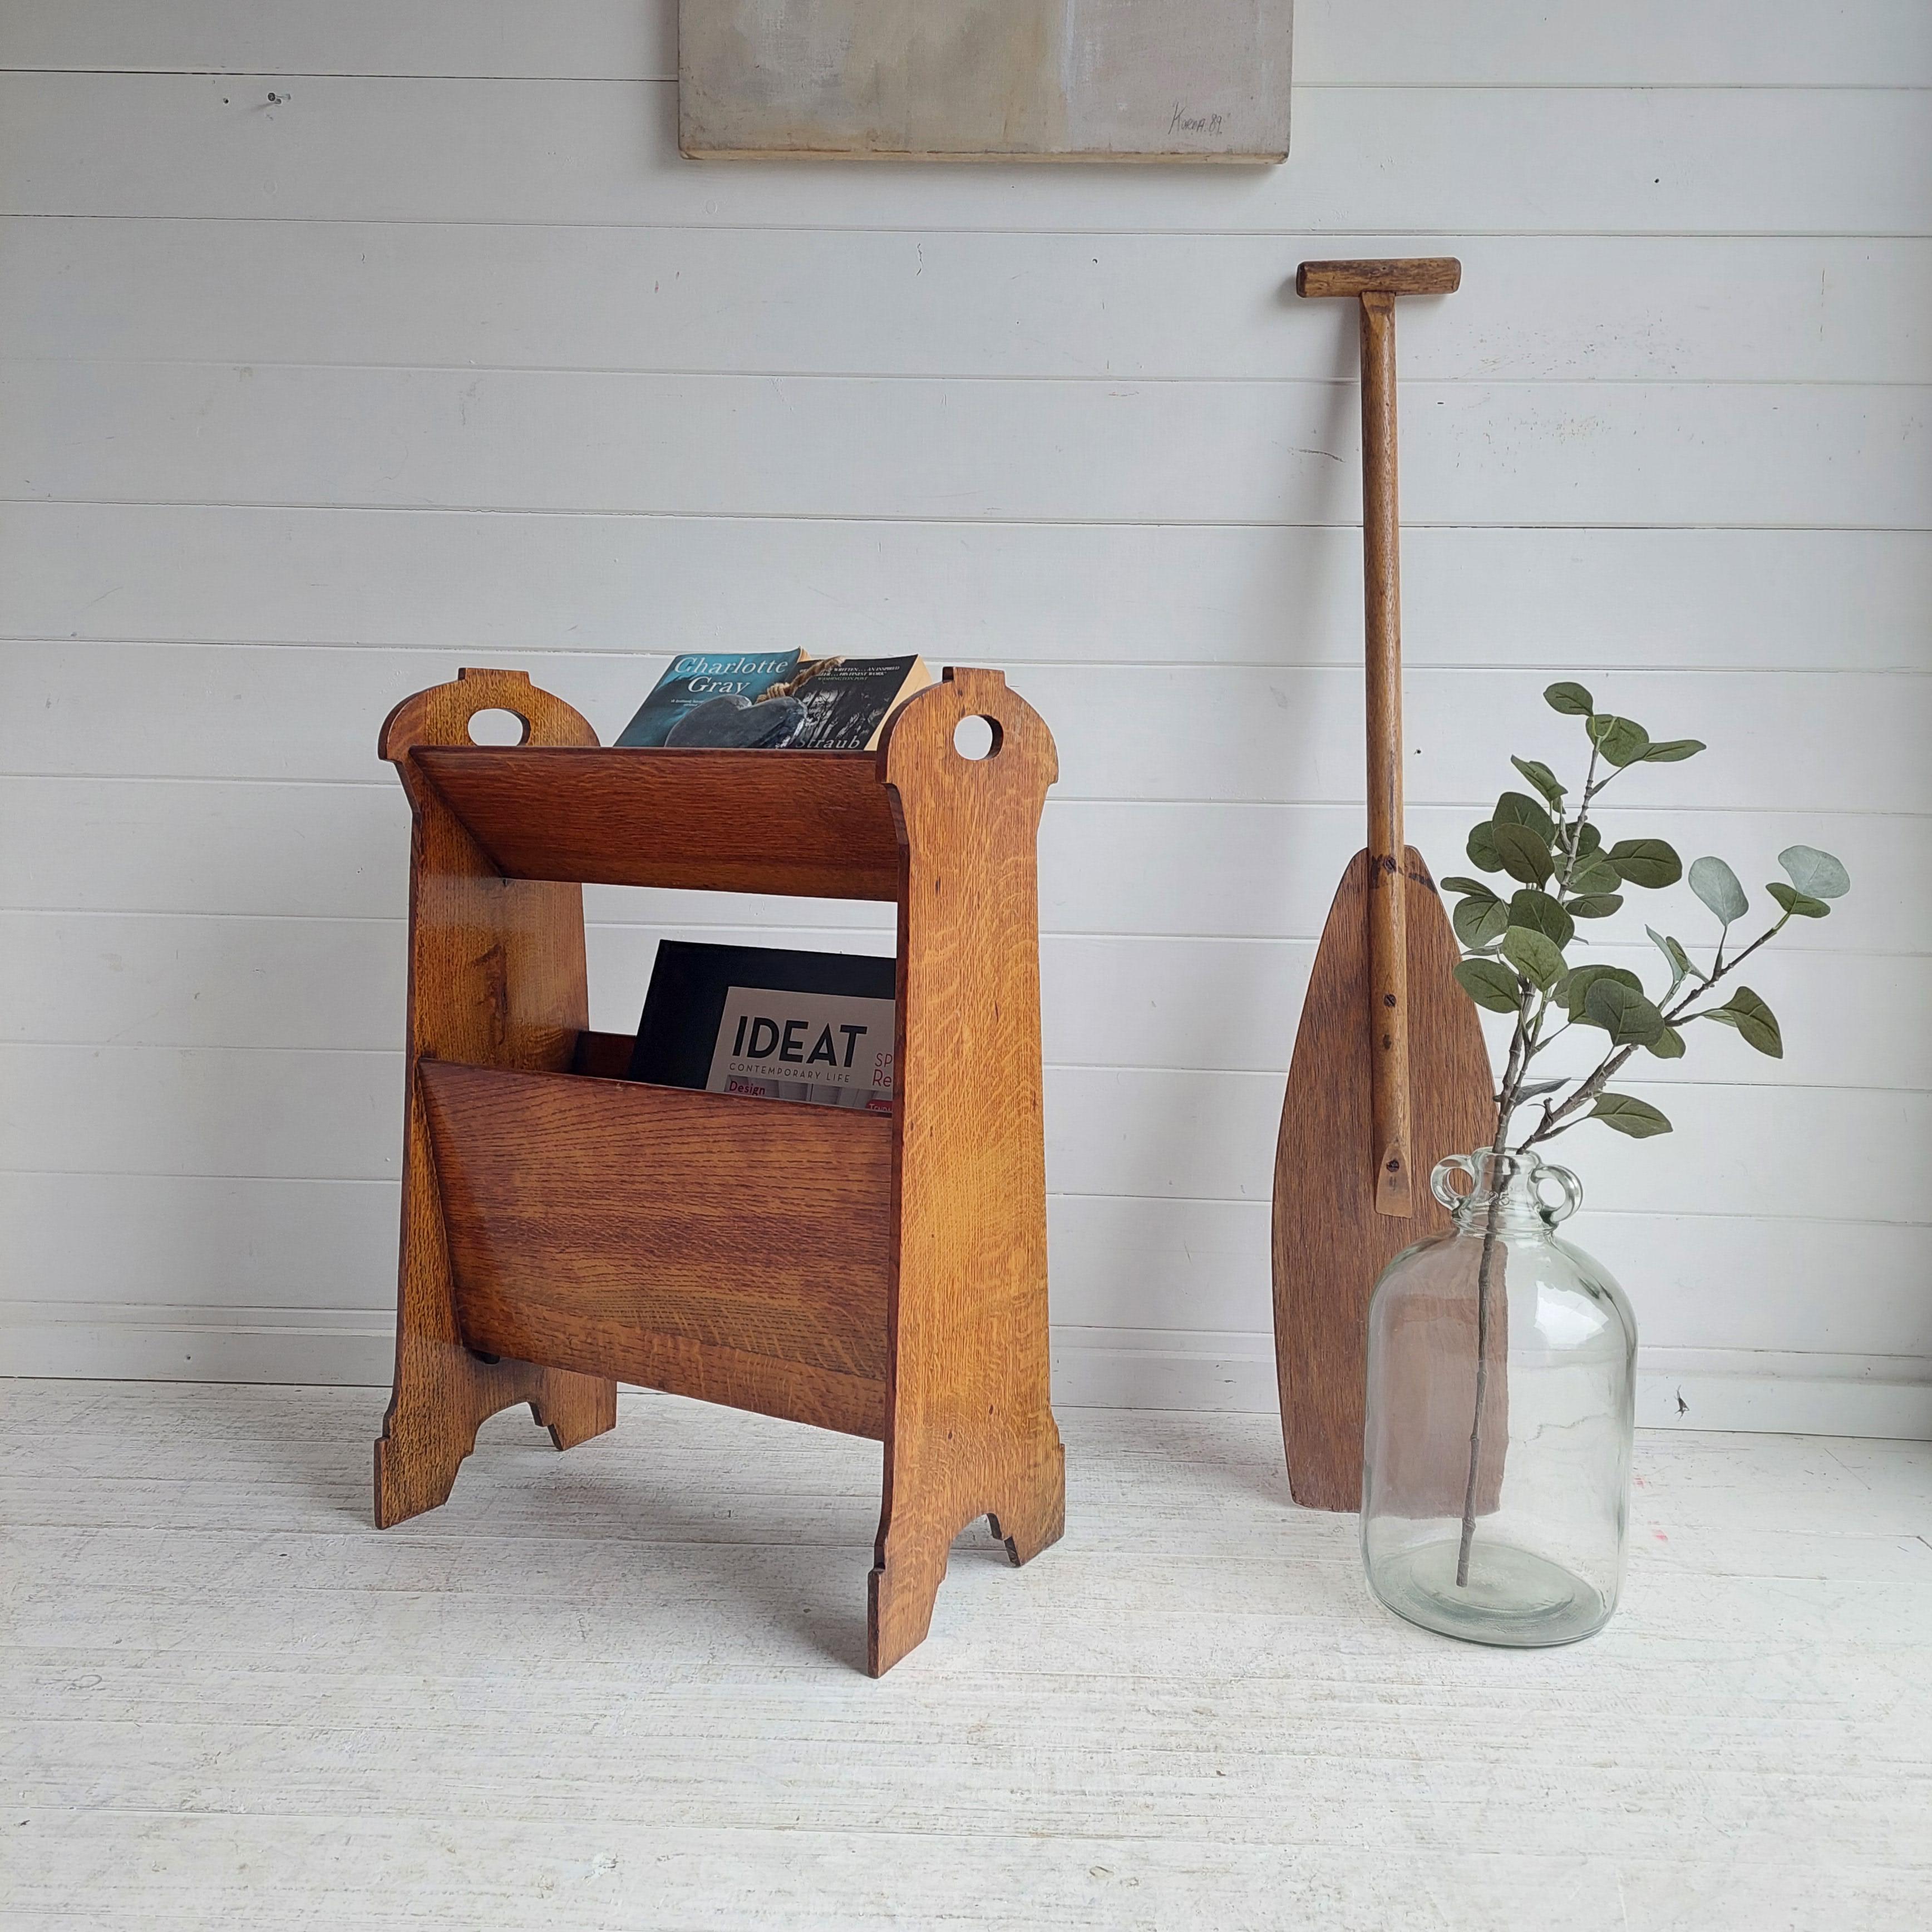 British Art Deco Arts & Crafts Free Standing oak Book trough Magazine Rack, Stand 30s